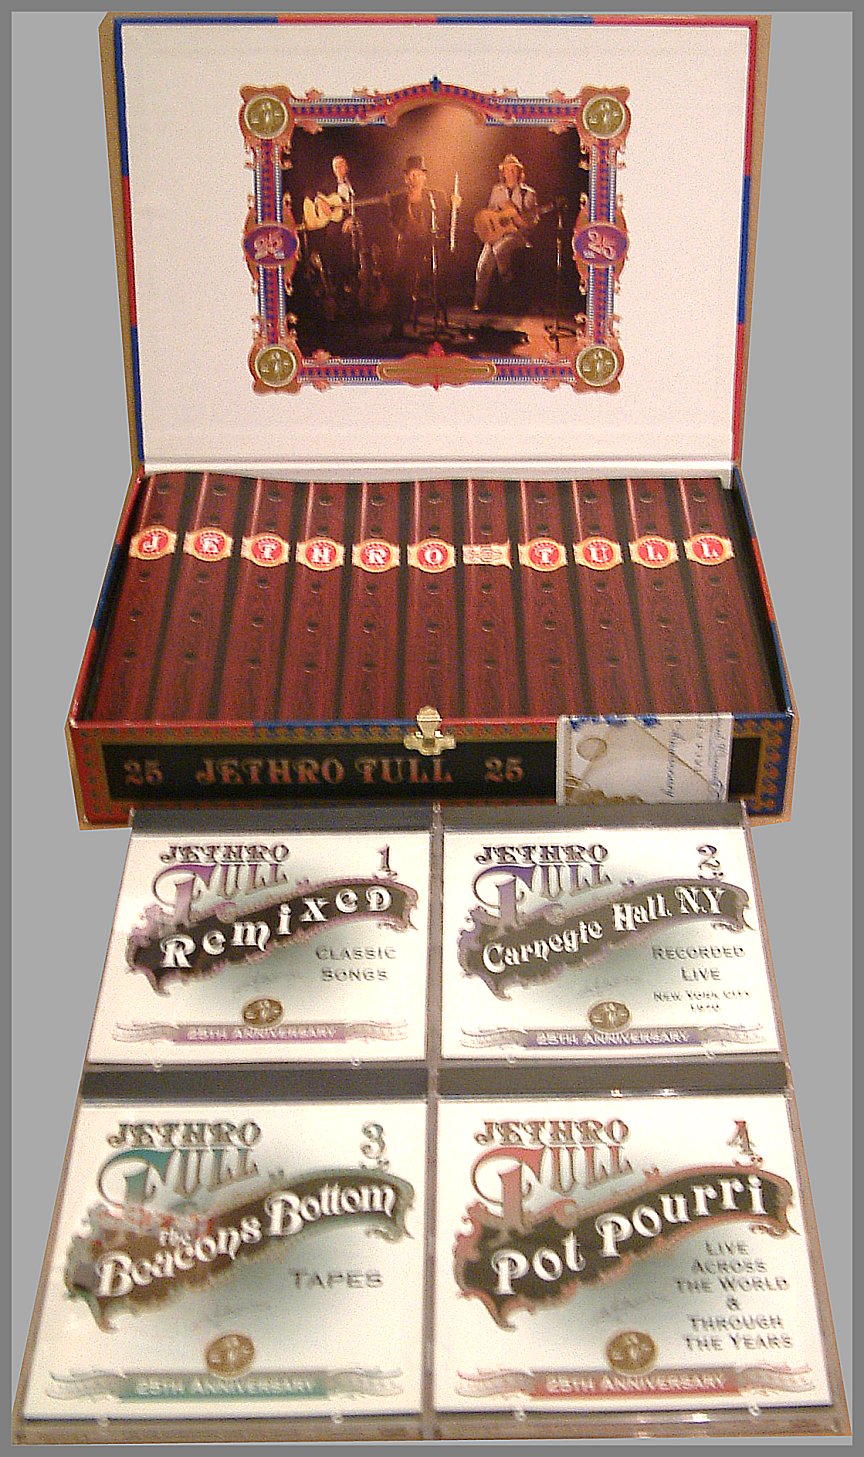 BOX SET COLLECTIONS: Jethro Tull : 25th Anniversary Box Set ( 4 CDs )